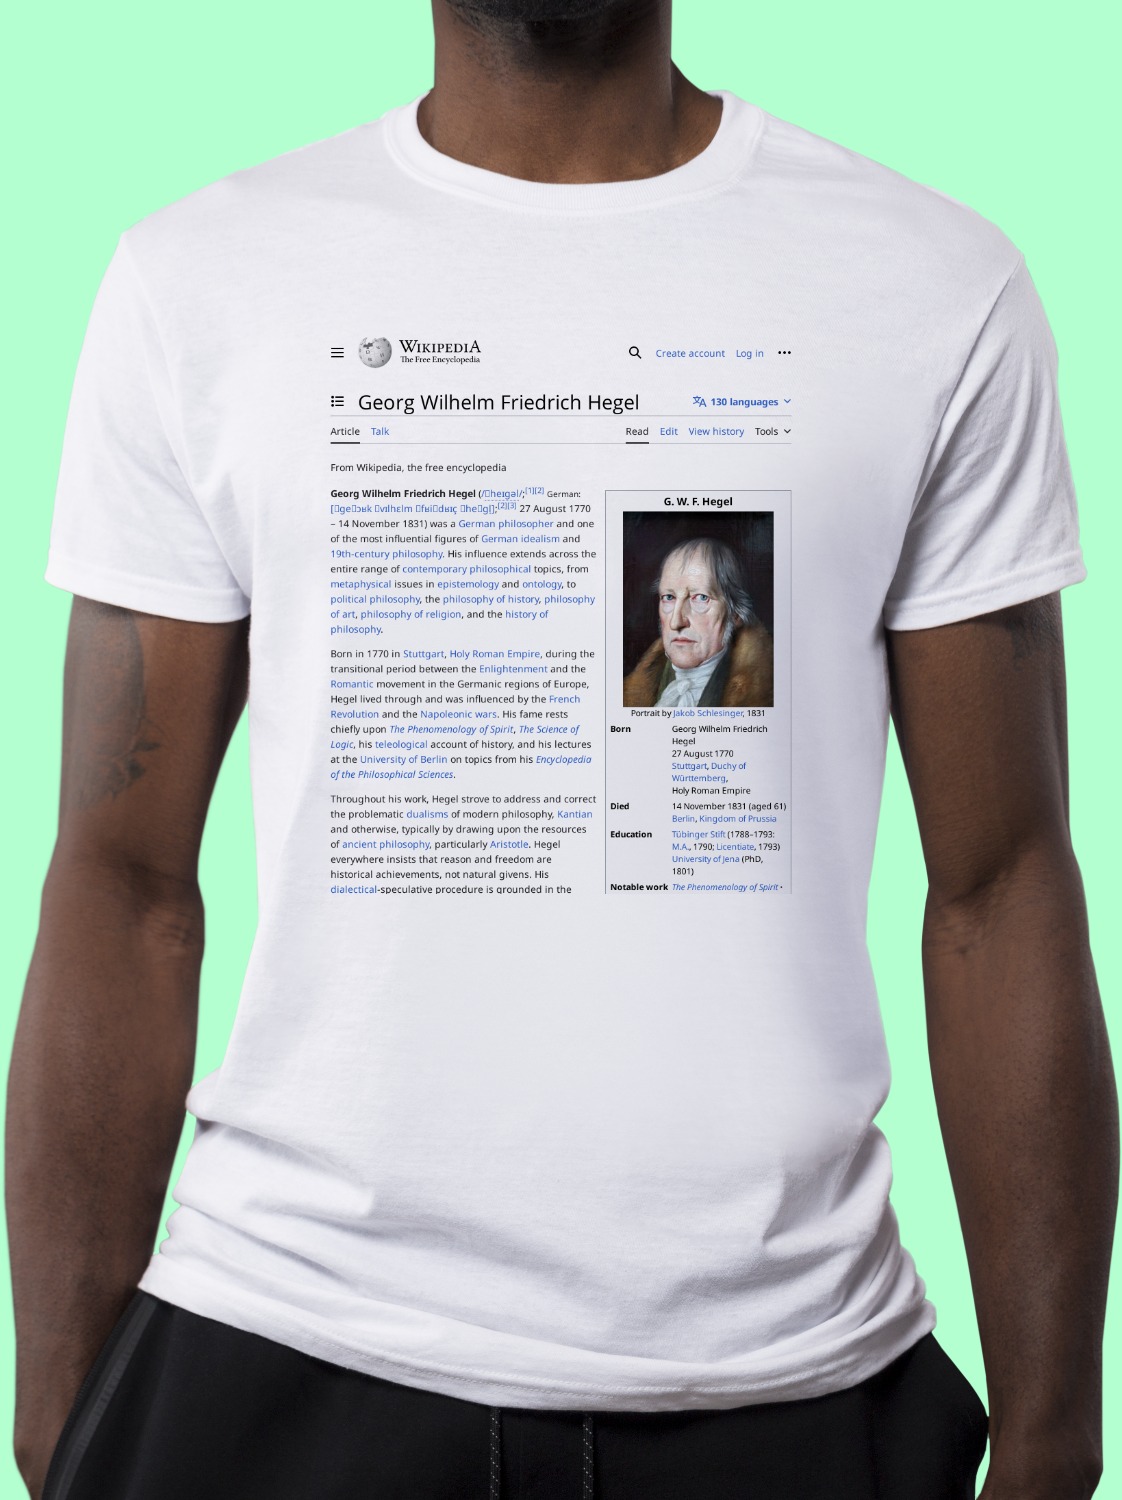 Georg_Wilhelm_Friedrich_Hegel Wikipedia Shirt